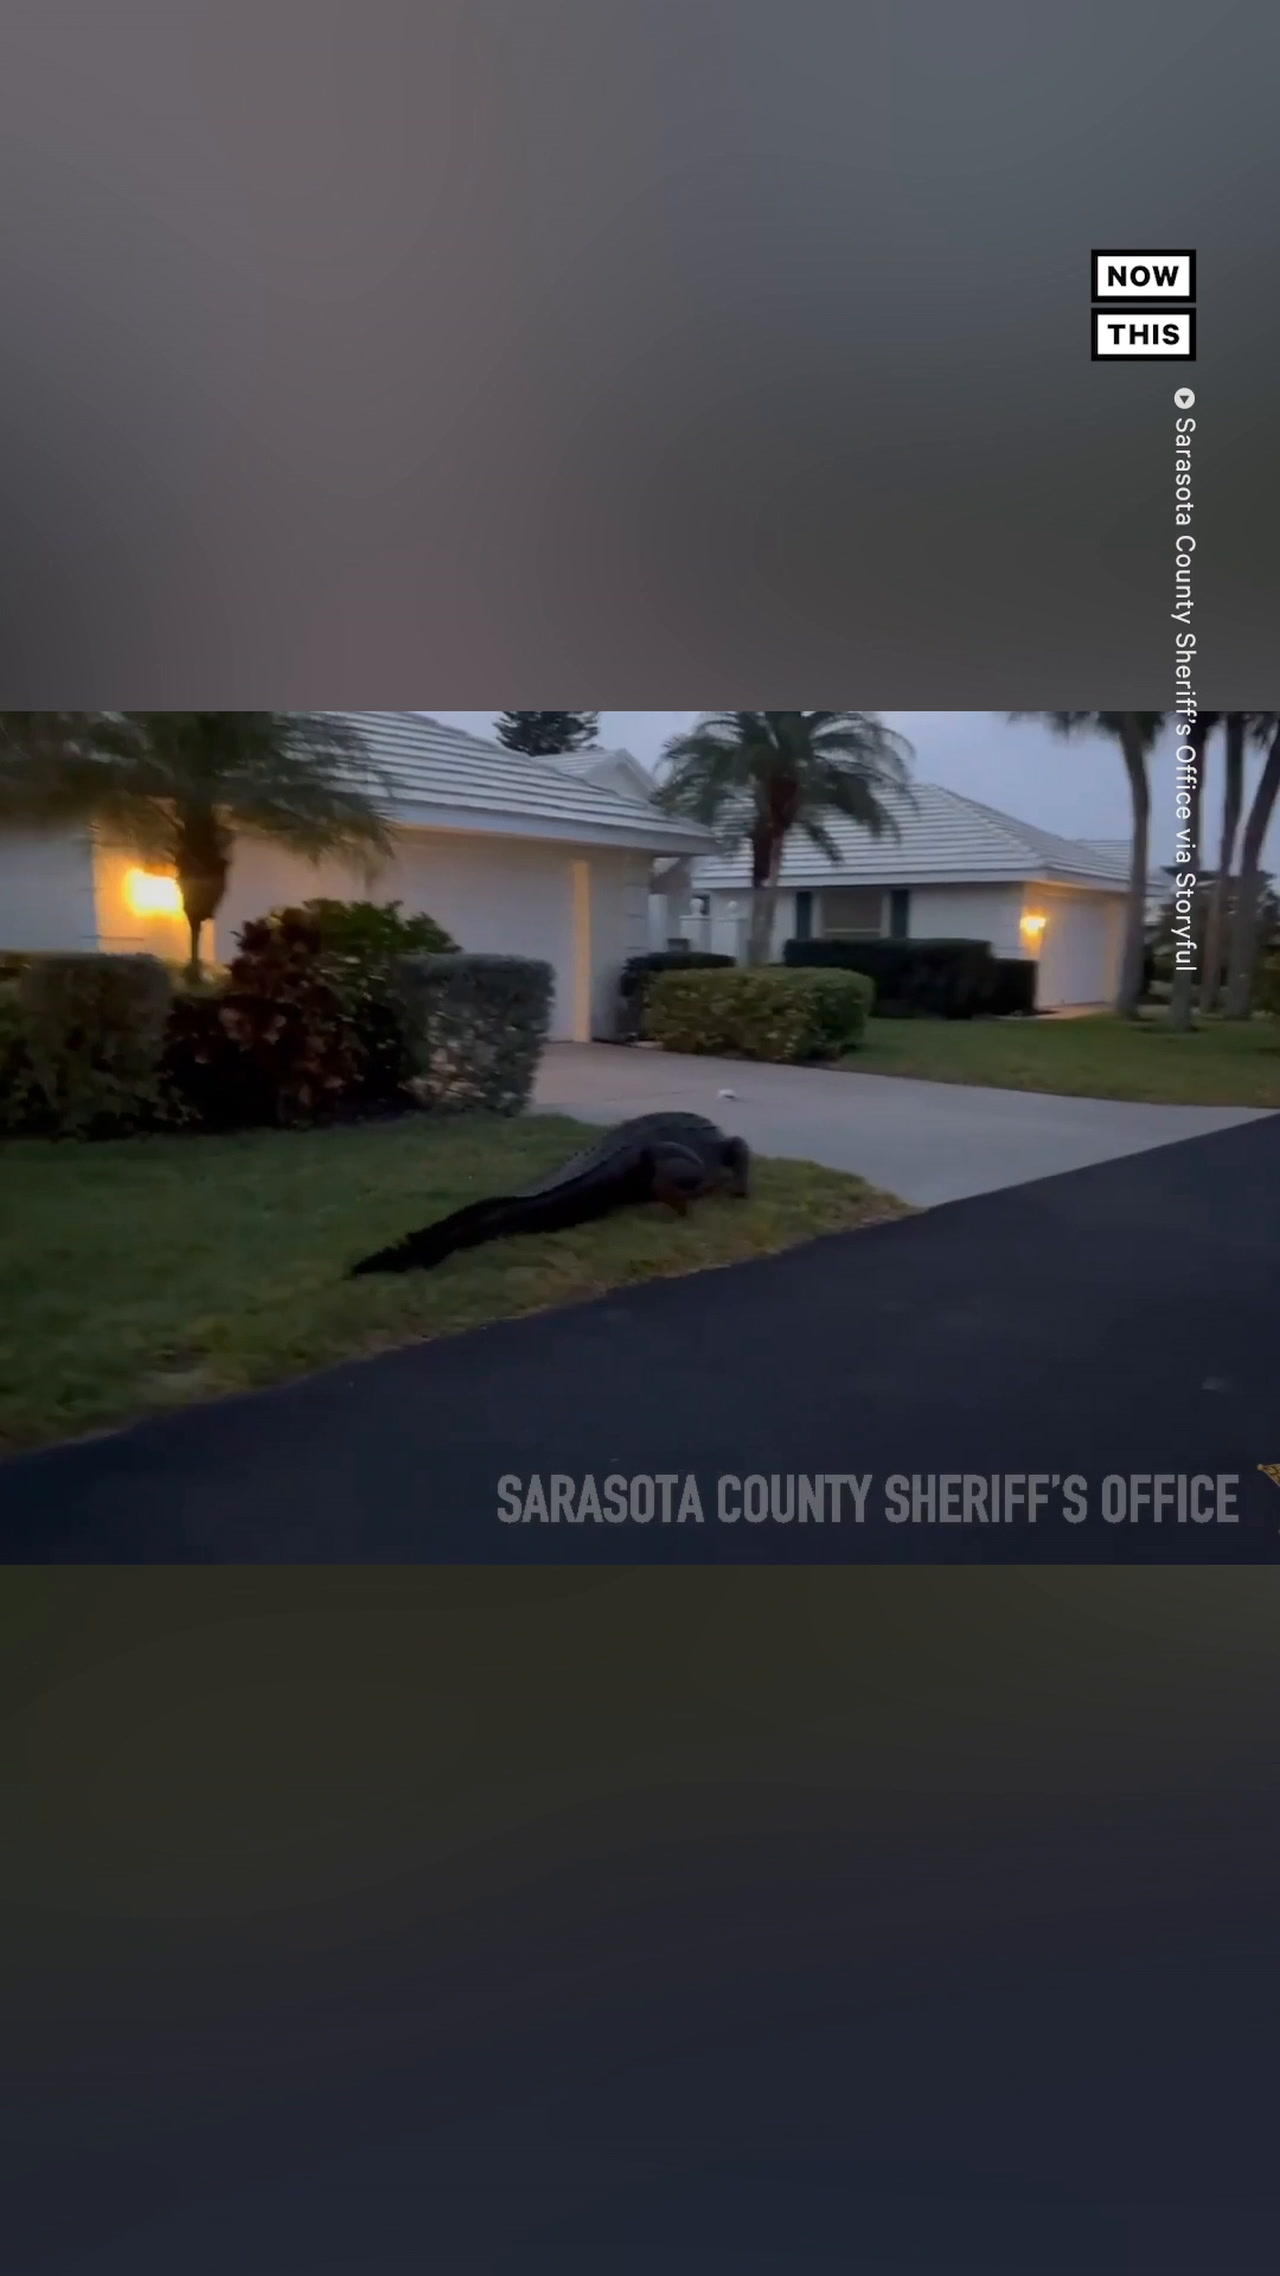 10-Foot-Long Alligator Spotted in Florida Neighborhood